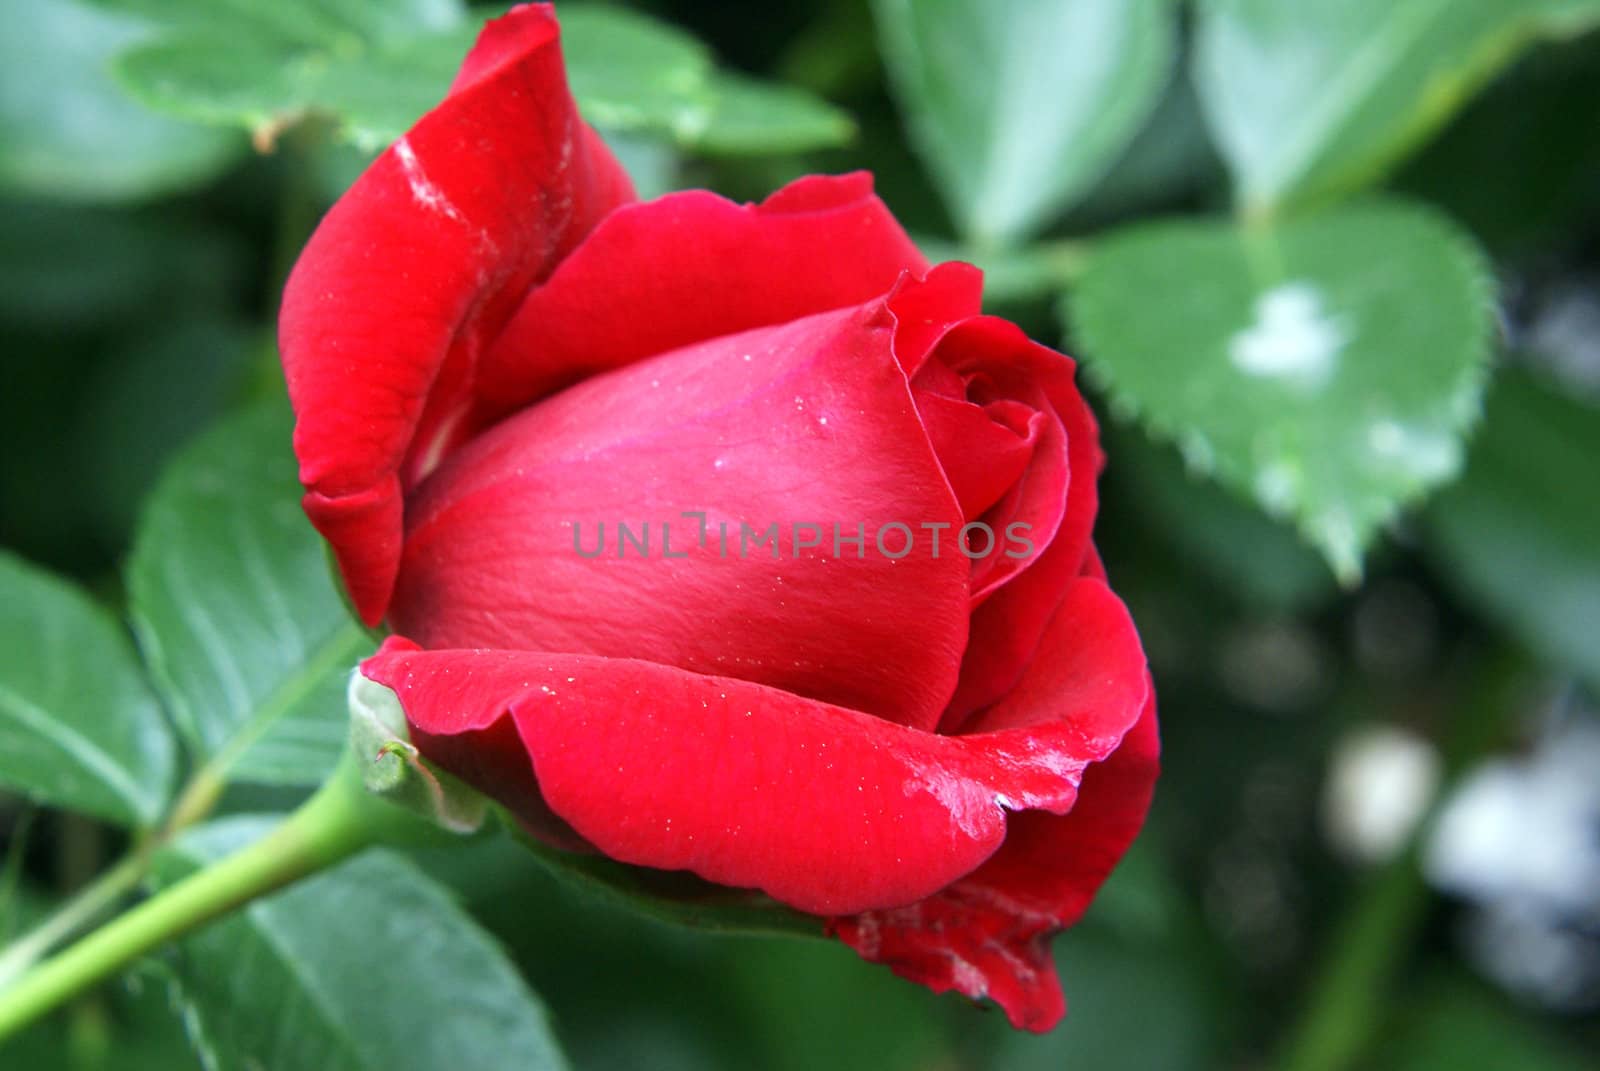 Closeup shot of a beautiful red rose